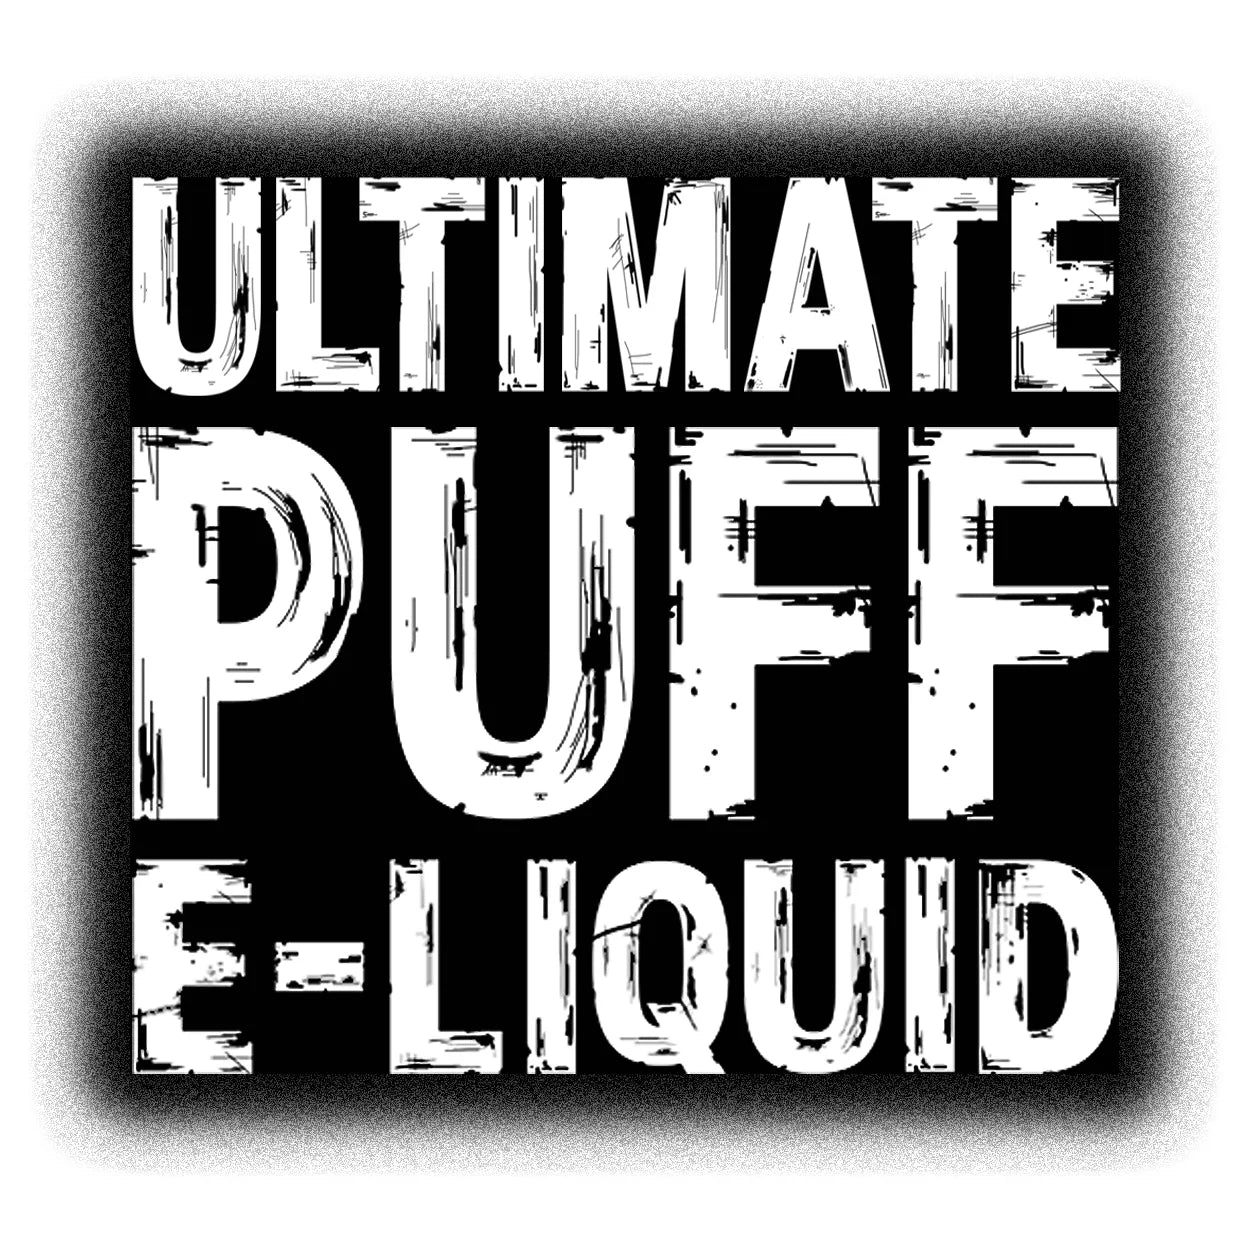 Ultimate E-Liquid